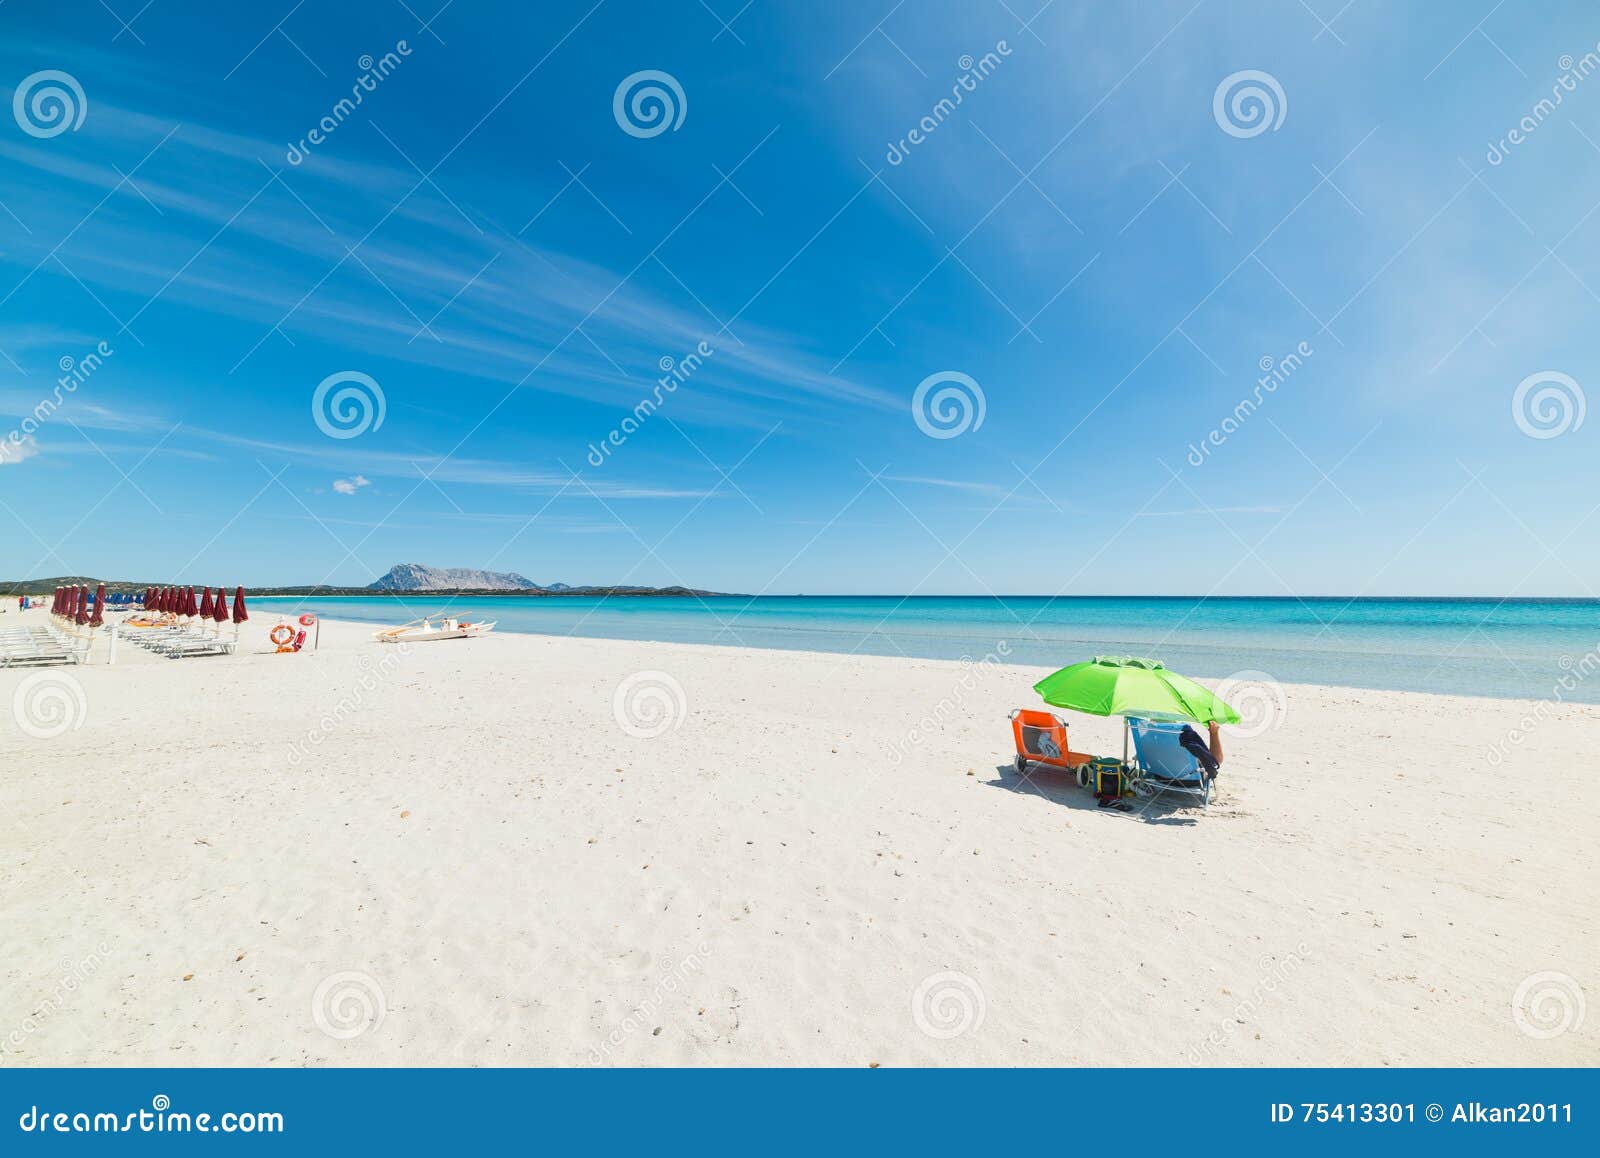 man alone in la cinta beach